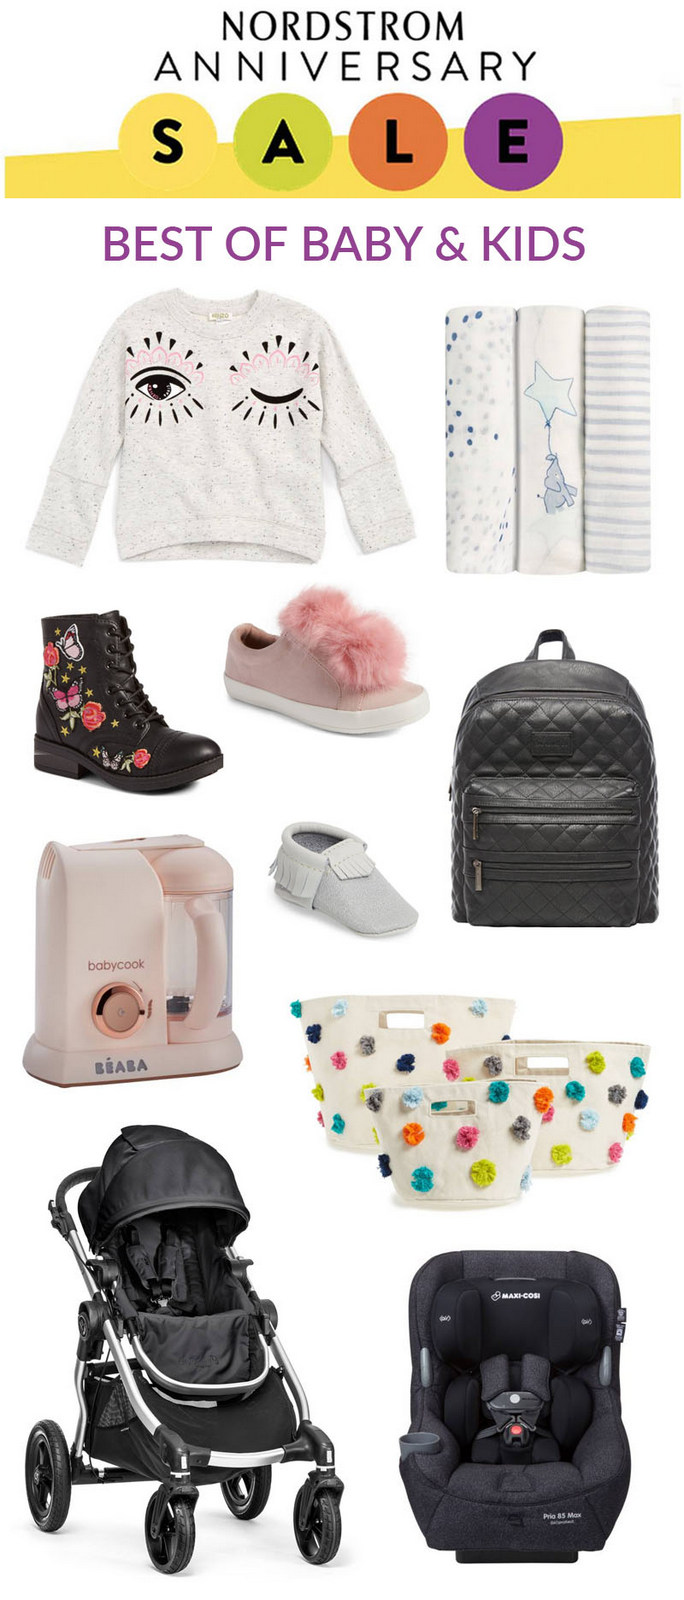 Nordstrom Sale: Best of Baby Essentials + Kid's Fashion by Utah fashion blogger Sandy A La Mode